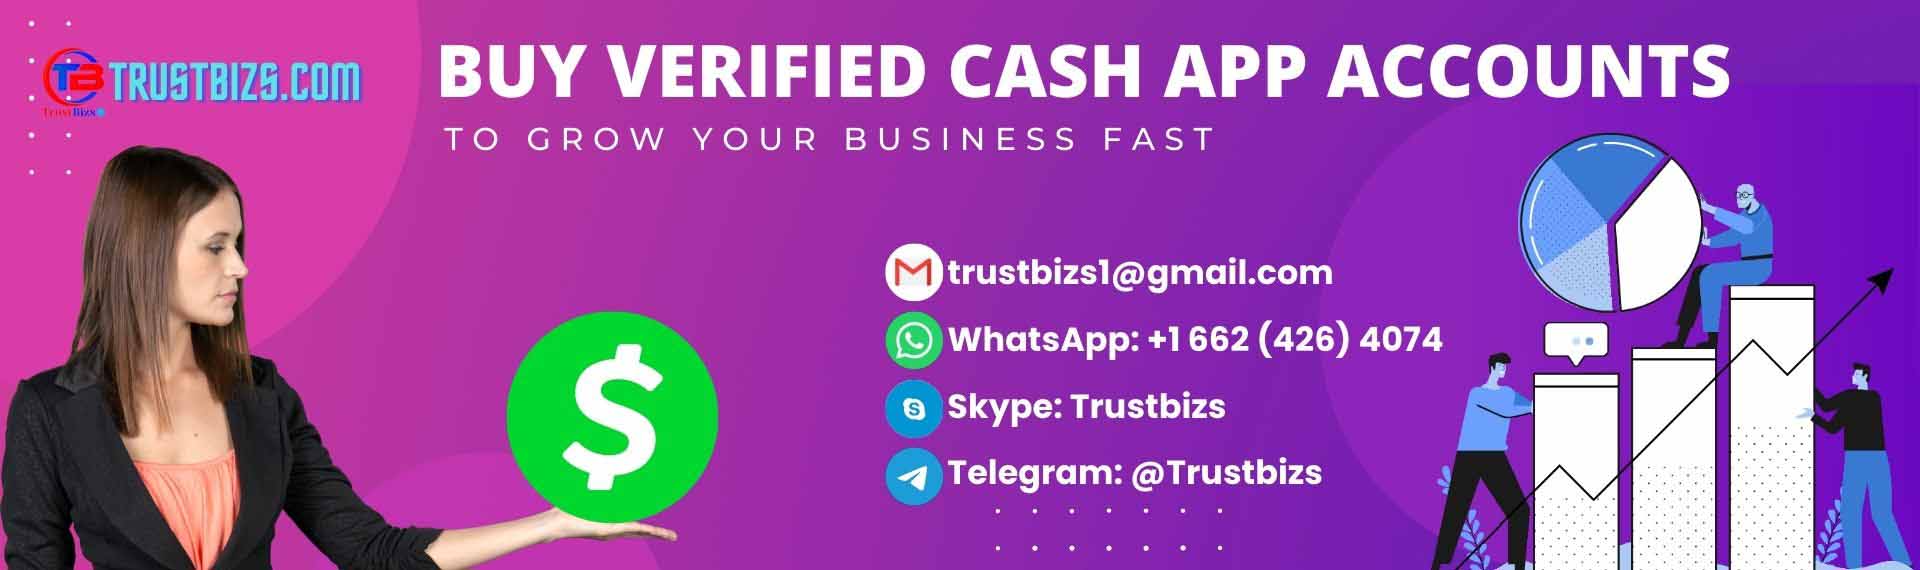 Buy Verified Cash App Account 02